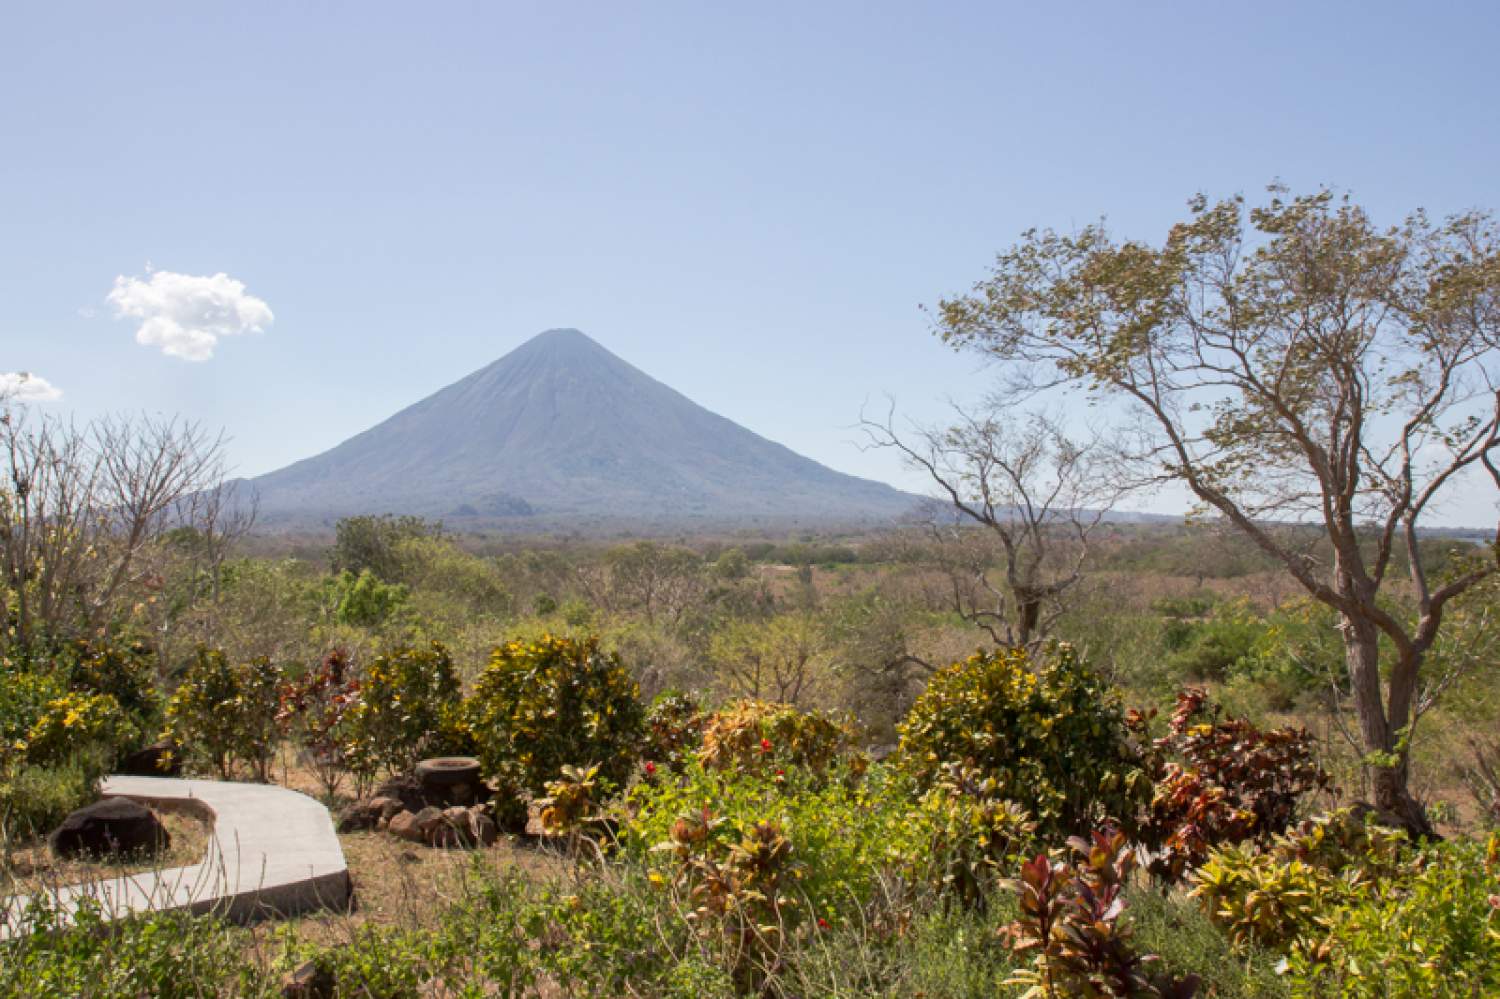 The Concepción volcano in Ometepe, Nicaragua